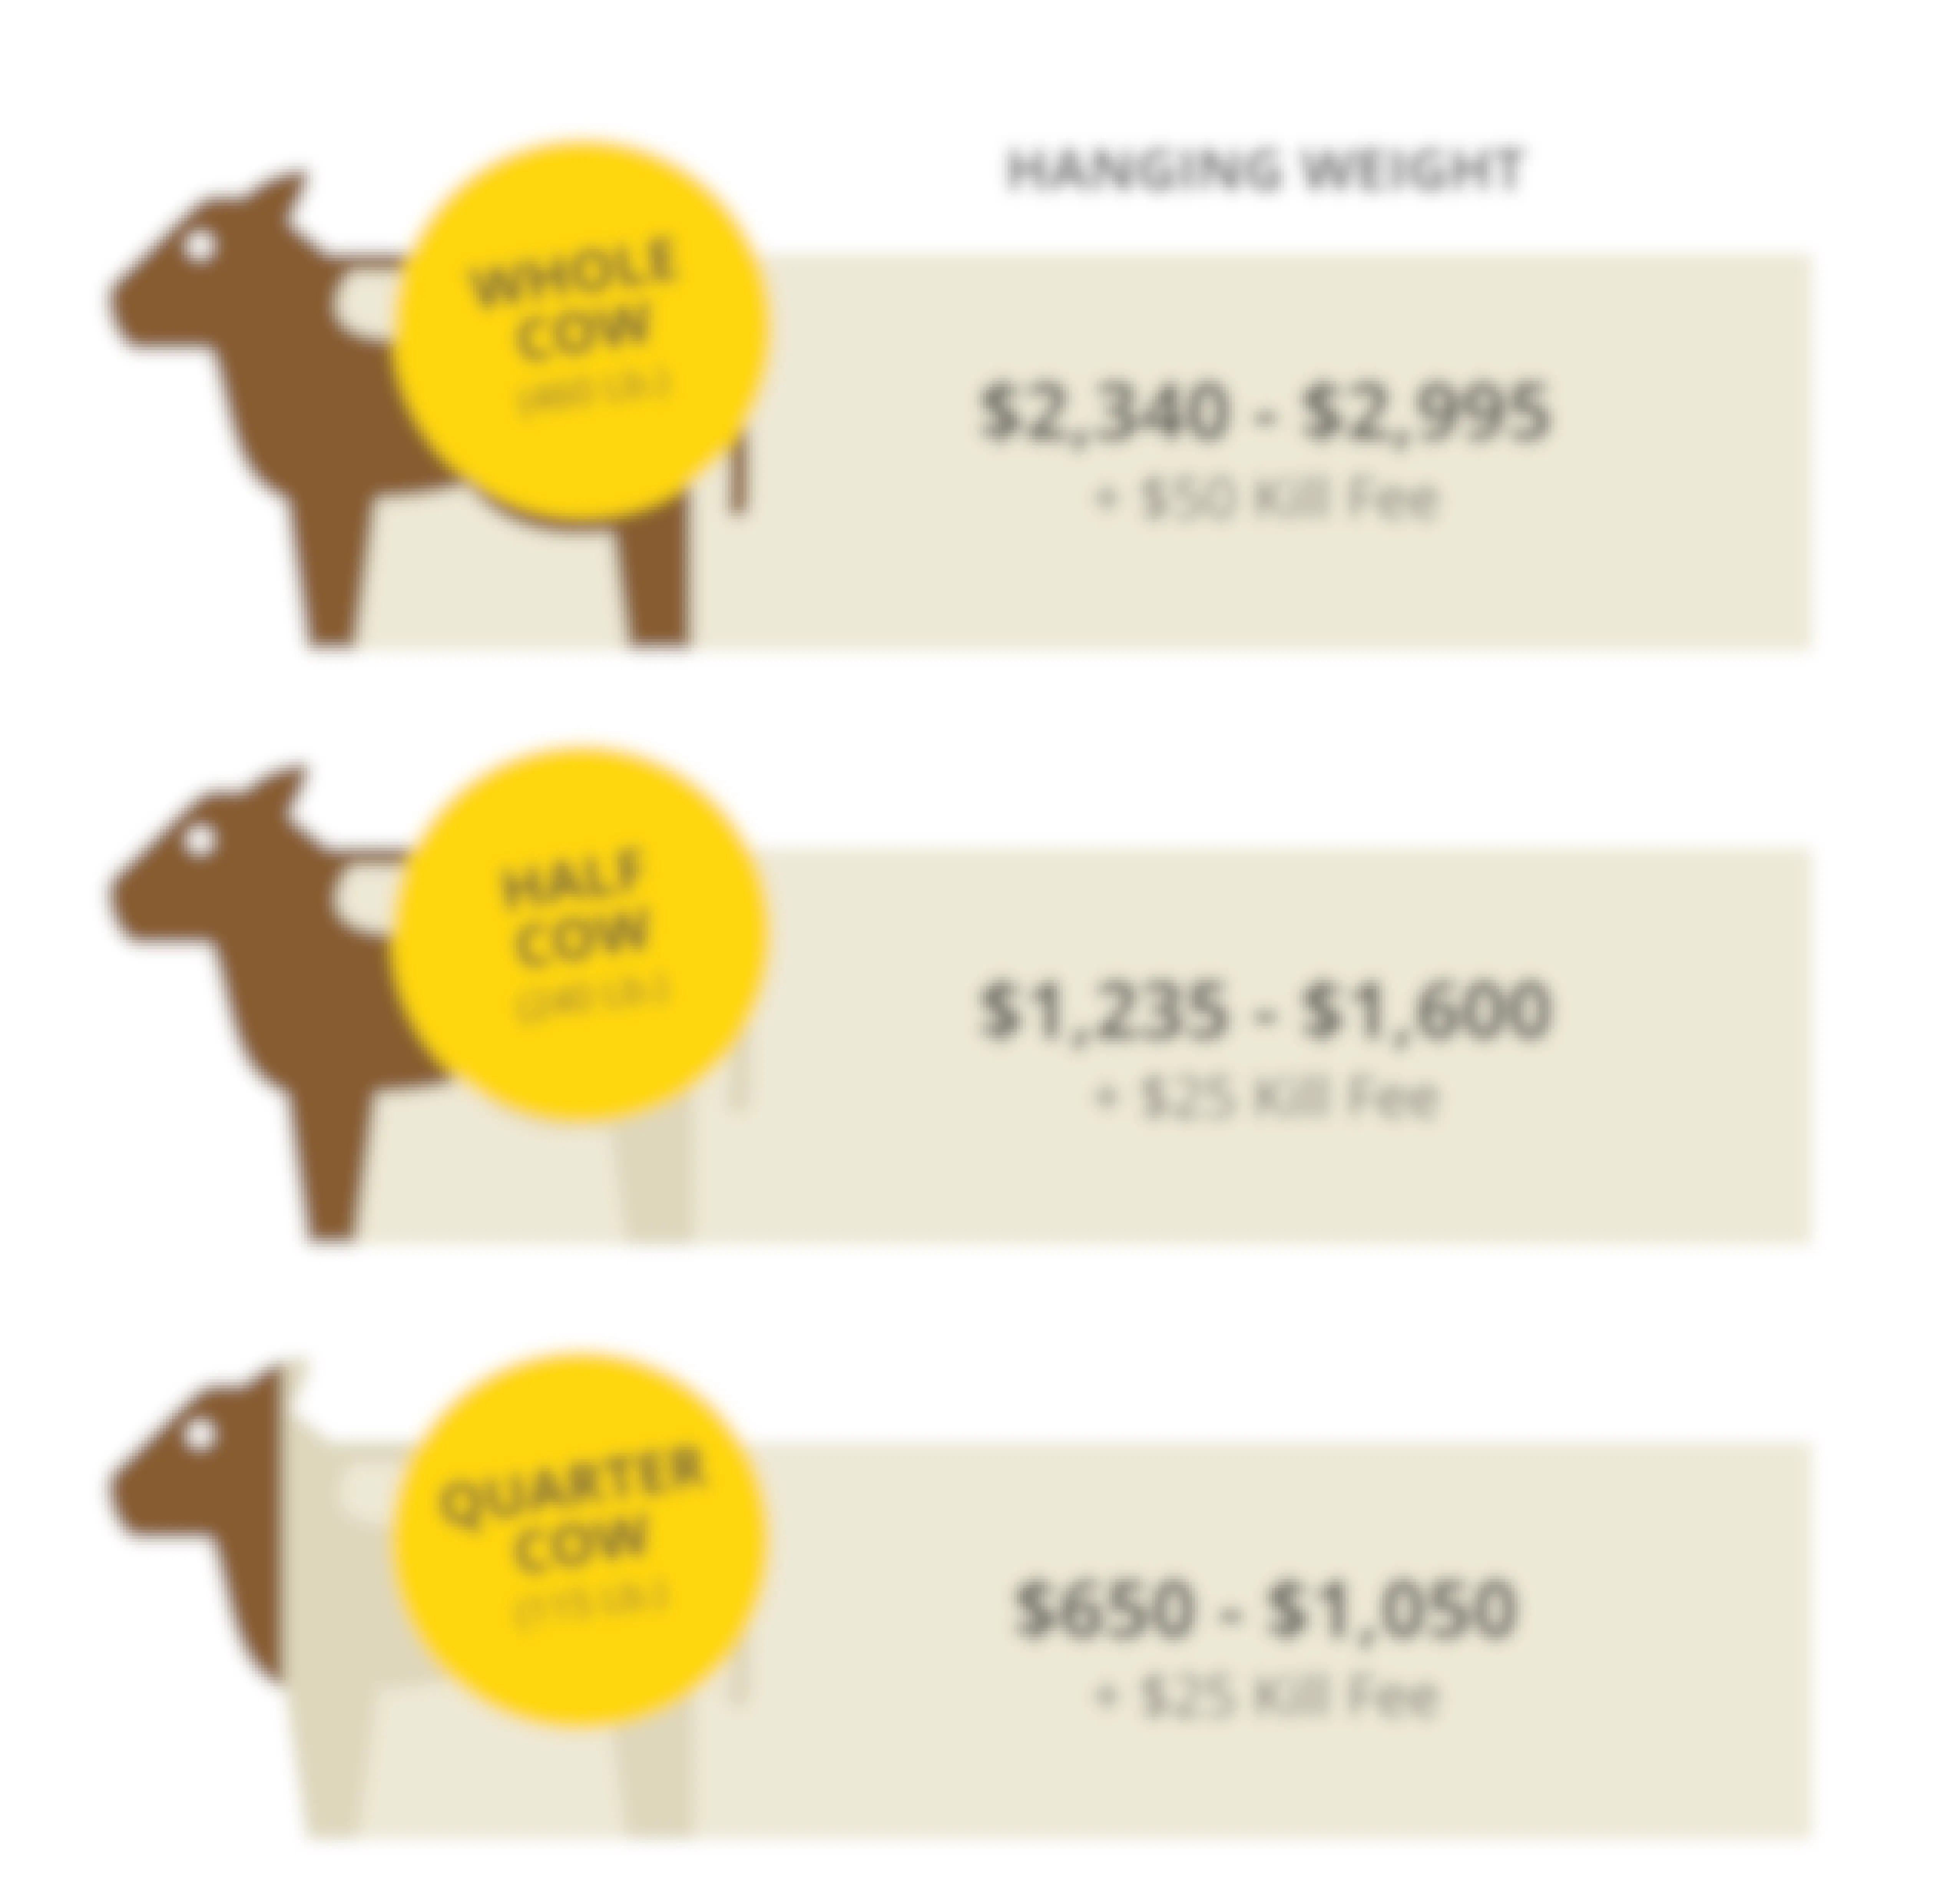 Whole cow: $2,340-$2.995 + $50 kill fee, Half cow: $1,235-$1,600 + $25 kill fee, and Quarter cow: $650-$1050 + $25 kill fee